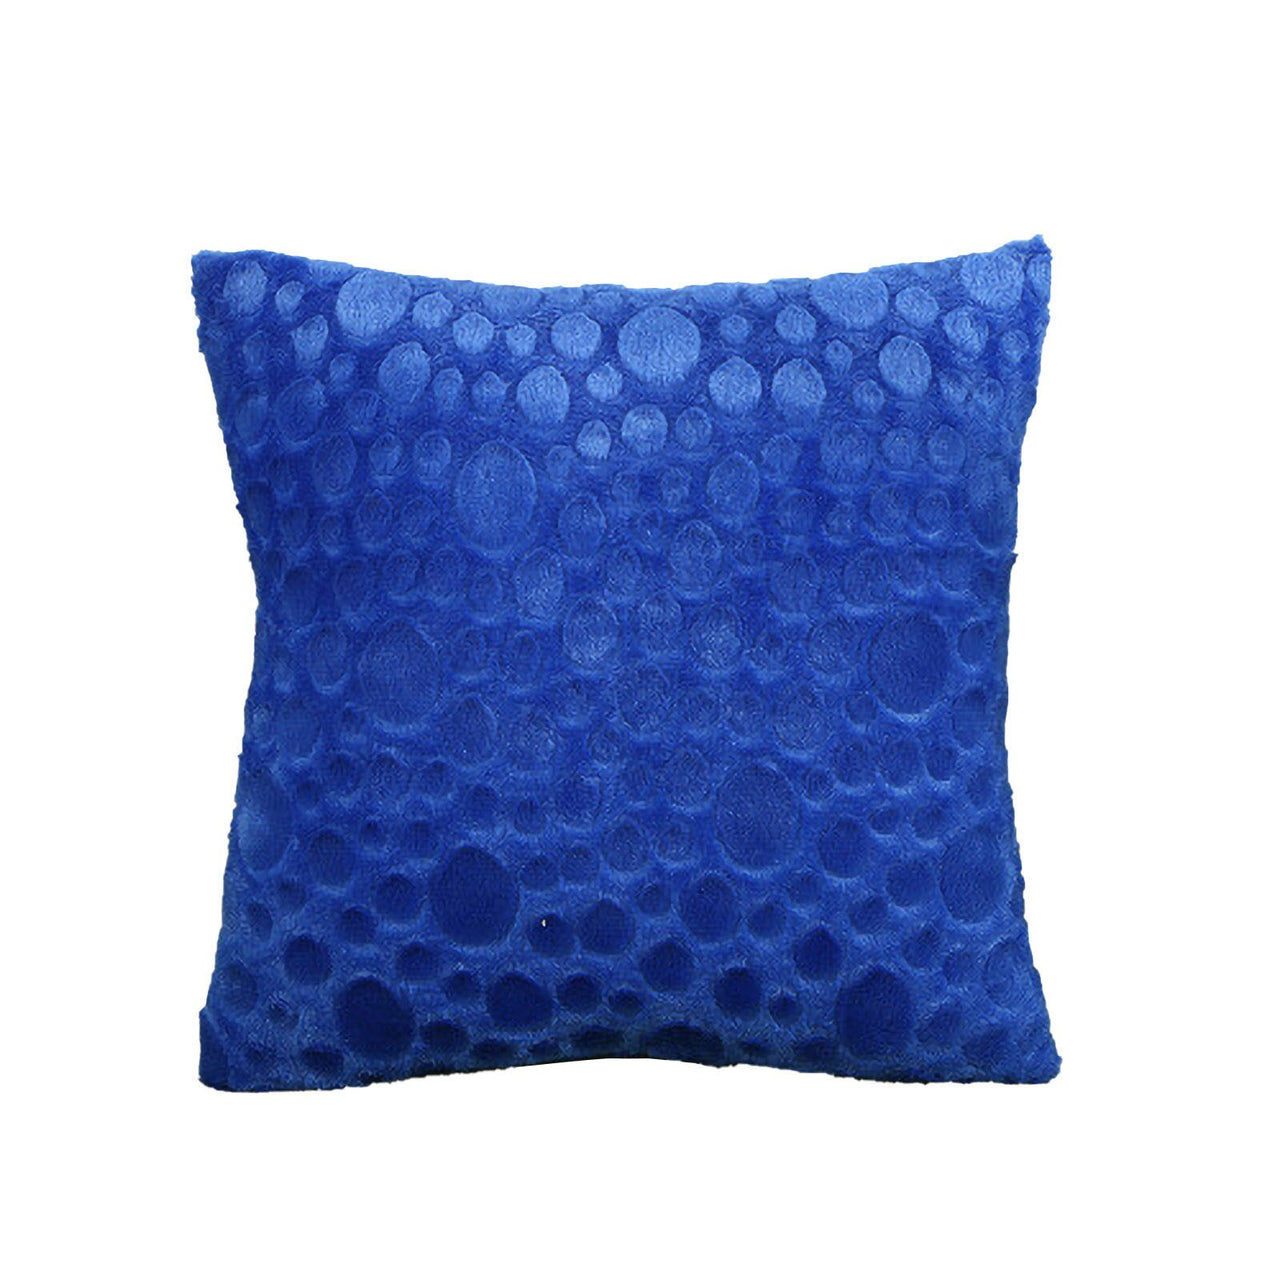 Soft Room Cushion Chair Pillow Cover